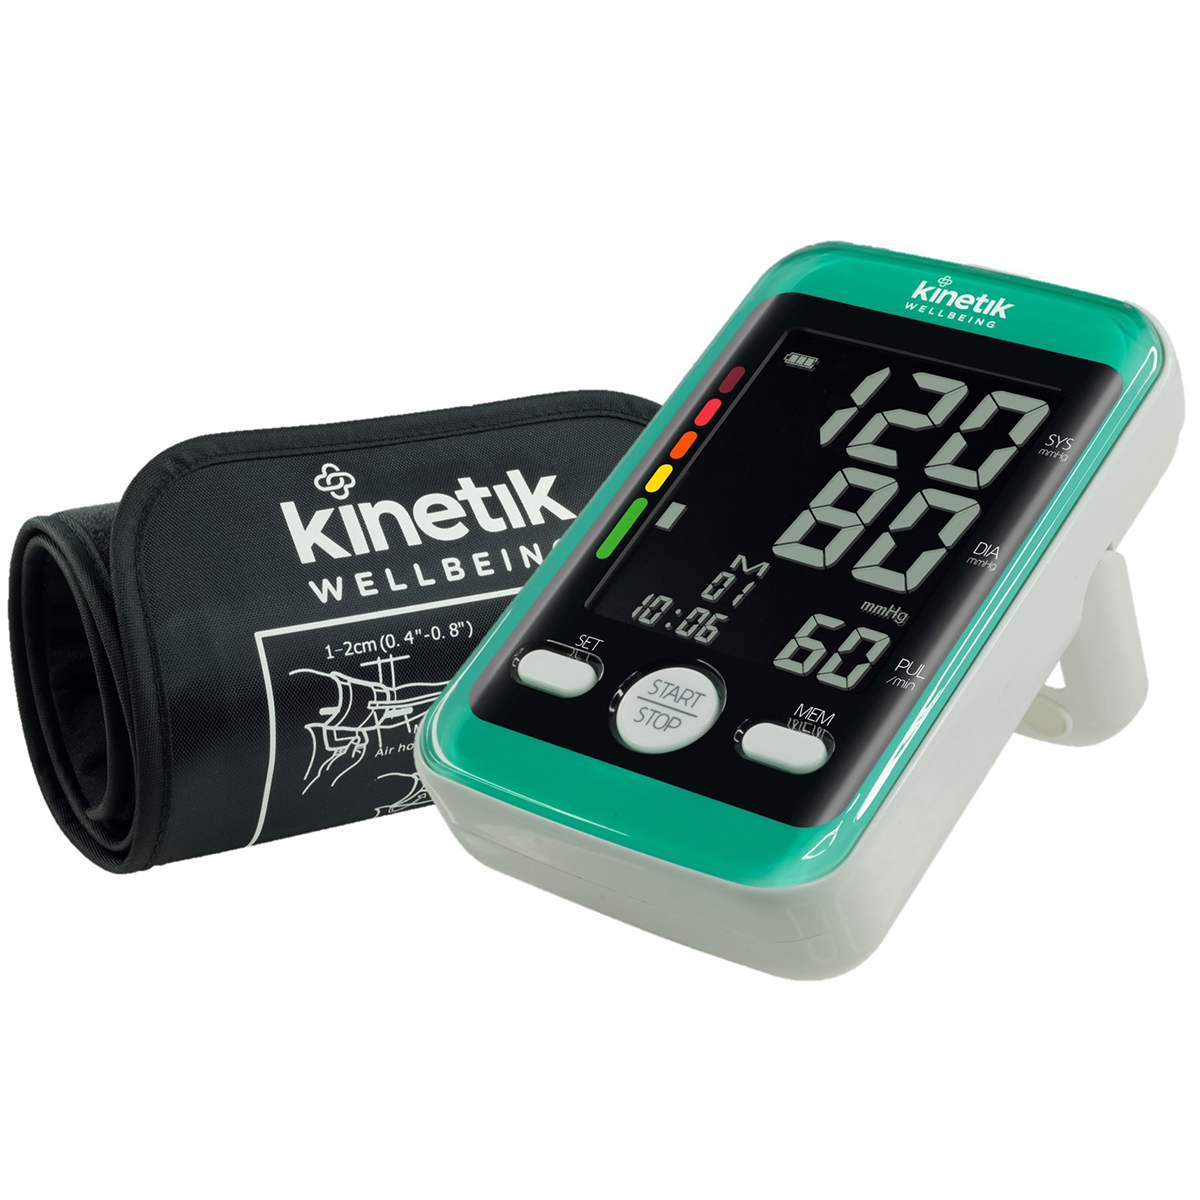 Kinetic Wellbeing Advanced Blood Pressure Monitor X2 Comfort